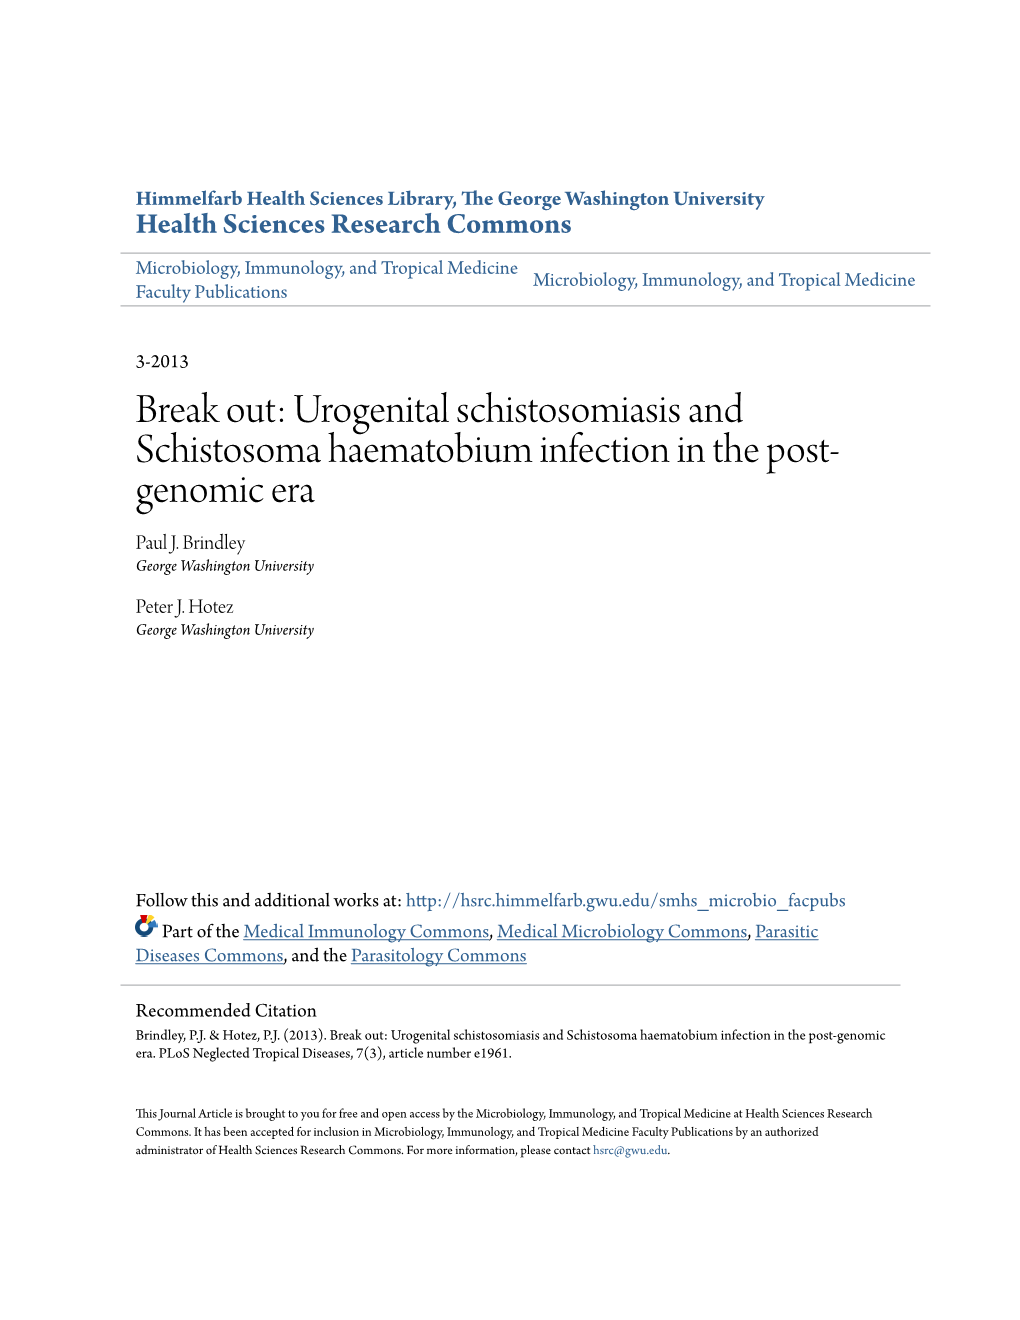 Break Out: Urogenital Schistosomiasis and Schistosoma Haematobium Infection in the Post- Genomic Era Paul J